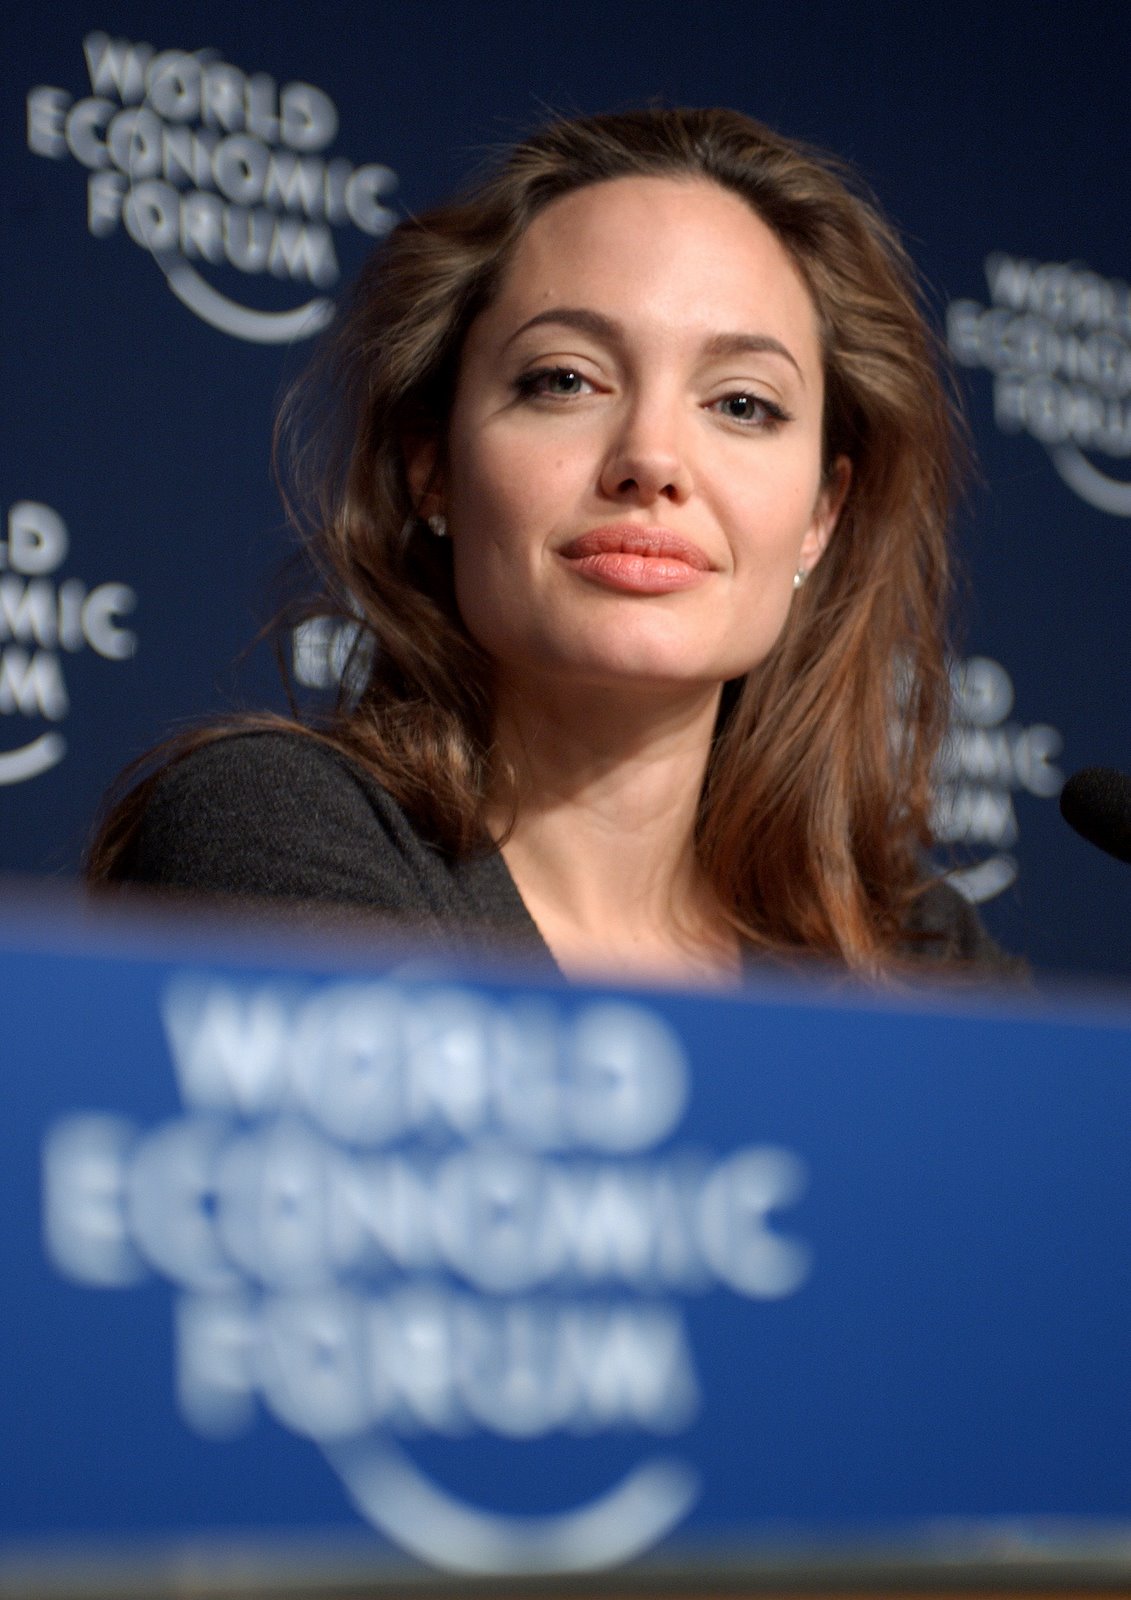 https://blogger.googleusercontent.com/img/b/R29vZ2xl/AVvXsEhQBQIvTCg-u6jsYaa8qra6burUUQxWb3yrMDaFugOz3oDohuNjtJa9FBXQRzPdoUdlSFPwWd8CEJUAGPg98YdZn72jZHVhh6UbWCvxa2xoA08qyBzwT5wDc7fl8wznGAVnXppETAy-rN3A/s1600/Angelina_Jolie_at_Davos.jpg